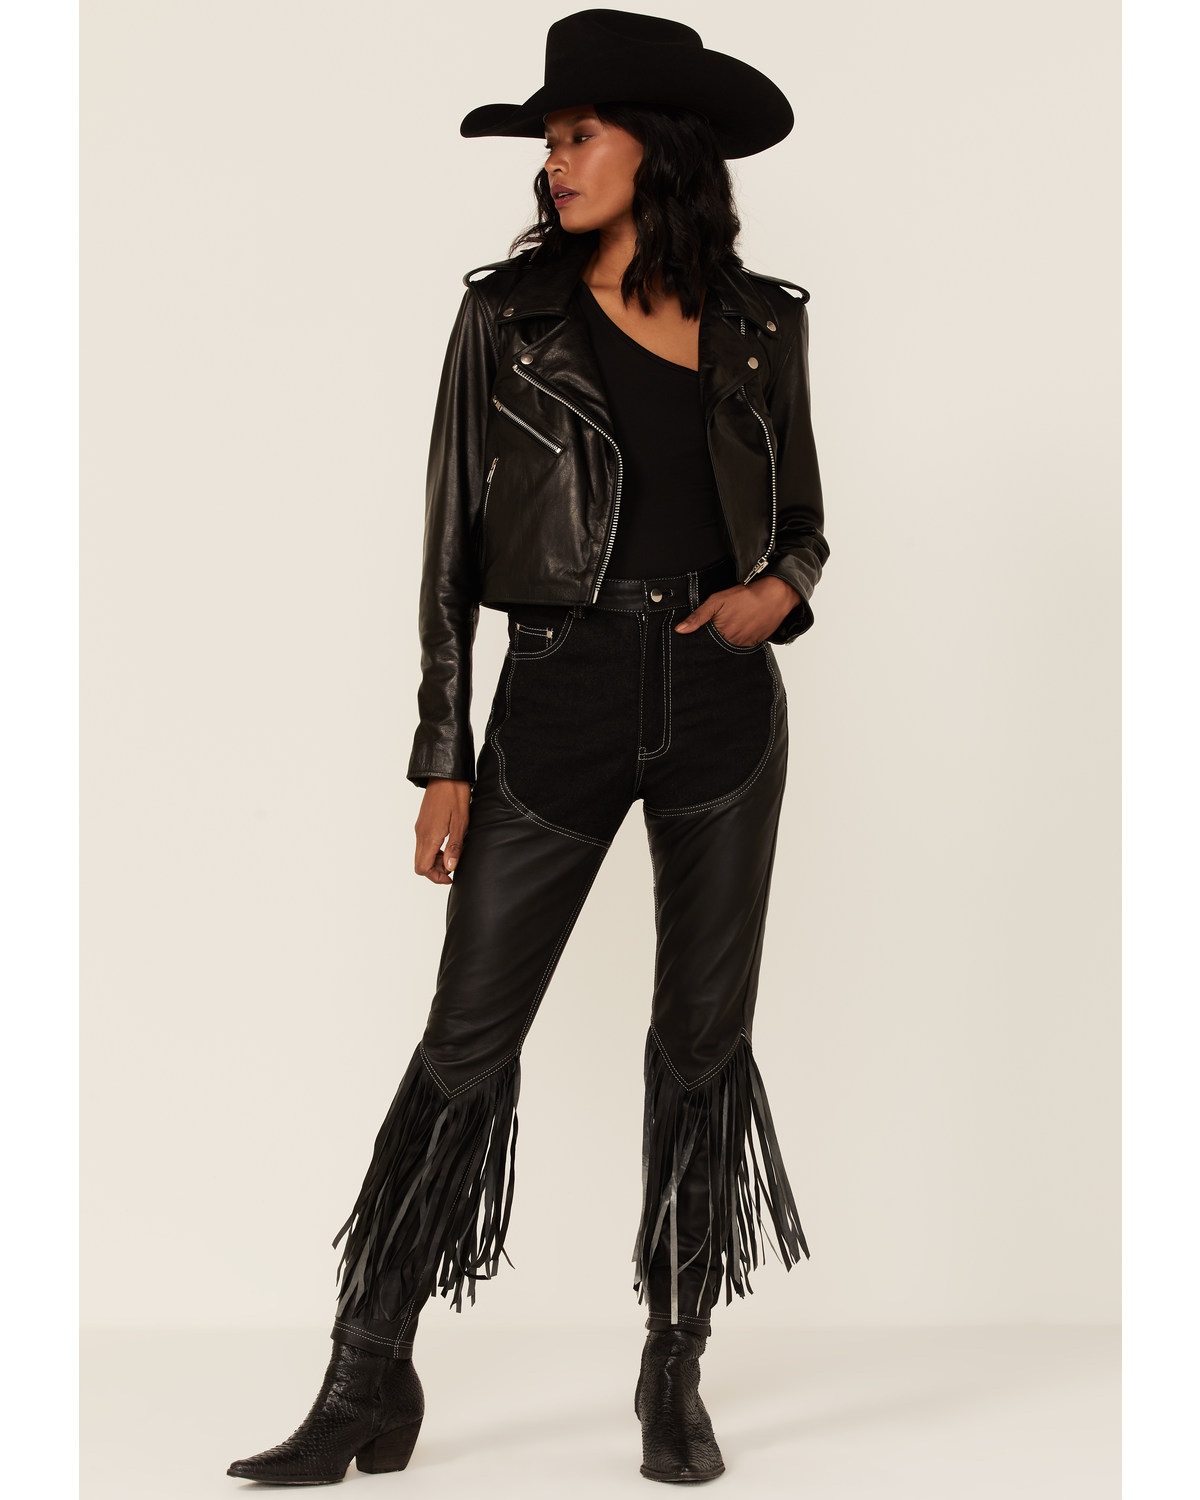 Understated Leather Women's Cowboy Denim & Fringe Chap Jeans